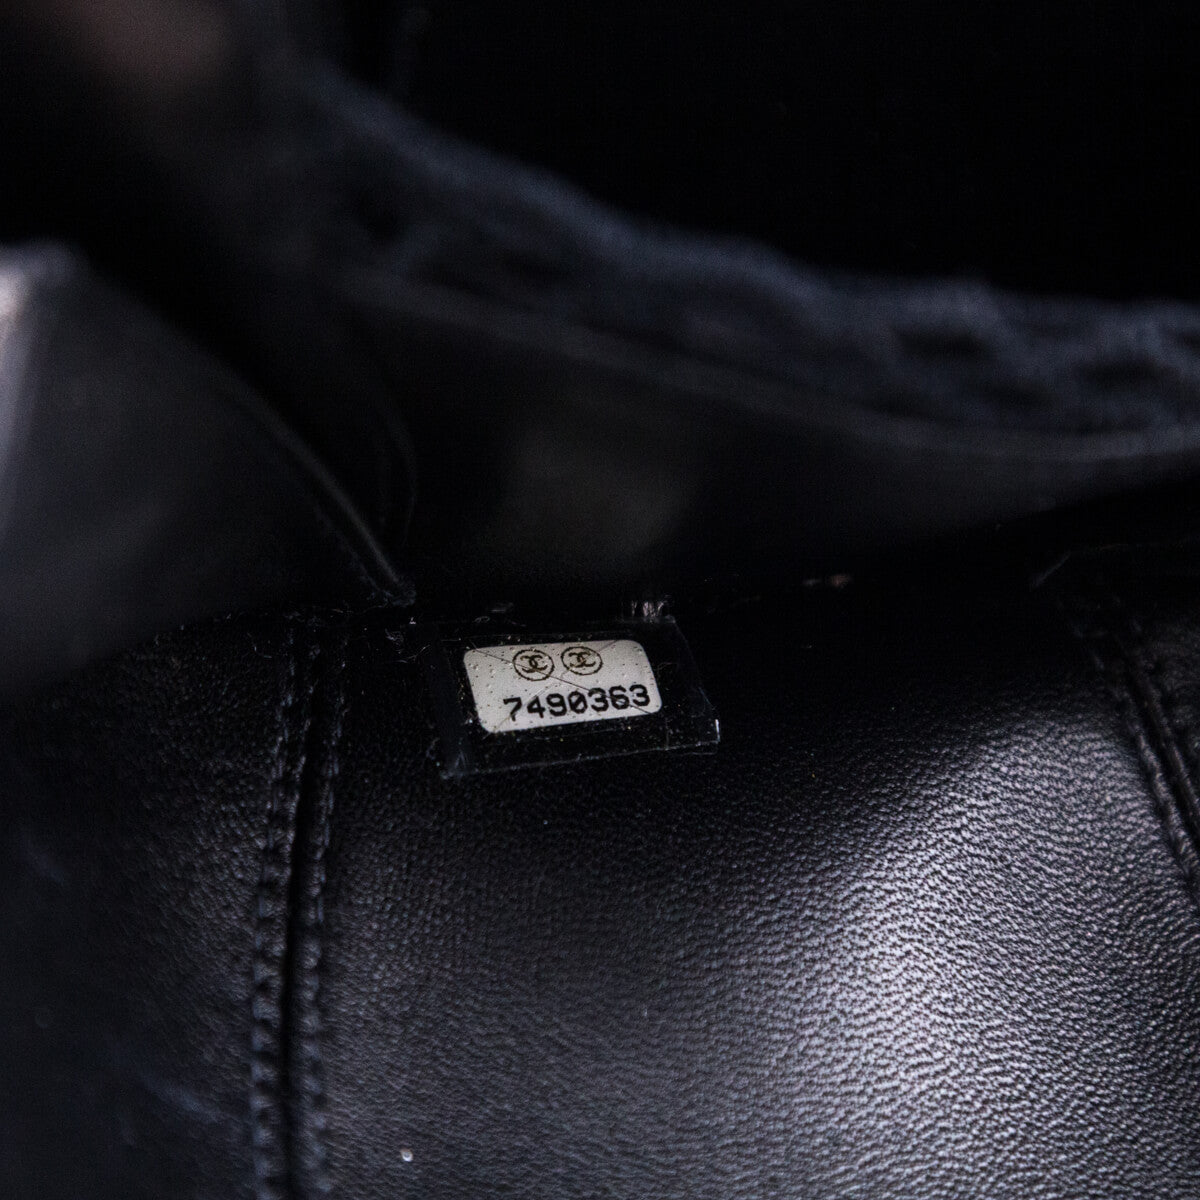 Chanel Black Leather & Satin Camellia Bag - Chanel Handbags Canada